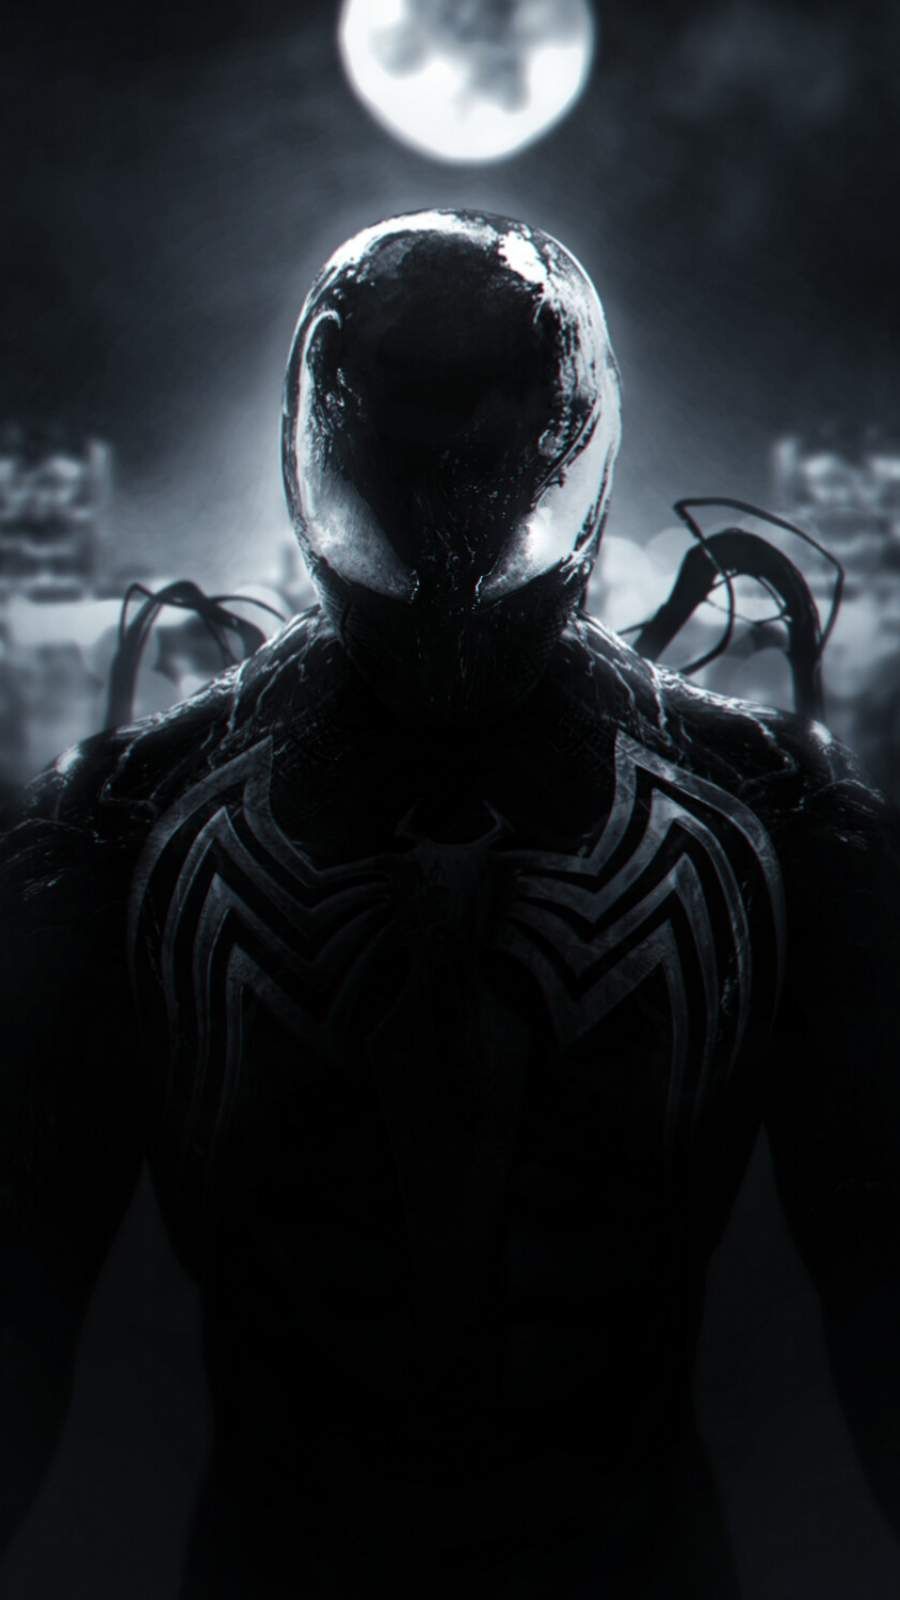 SPIDER MAN SYMBIOTE IPhone Wallpaper. Symbiote spiderman, Marvel comics wallpaper, Spiderman art